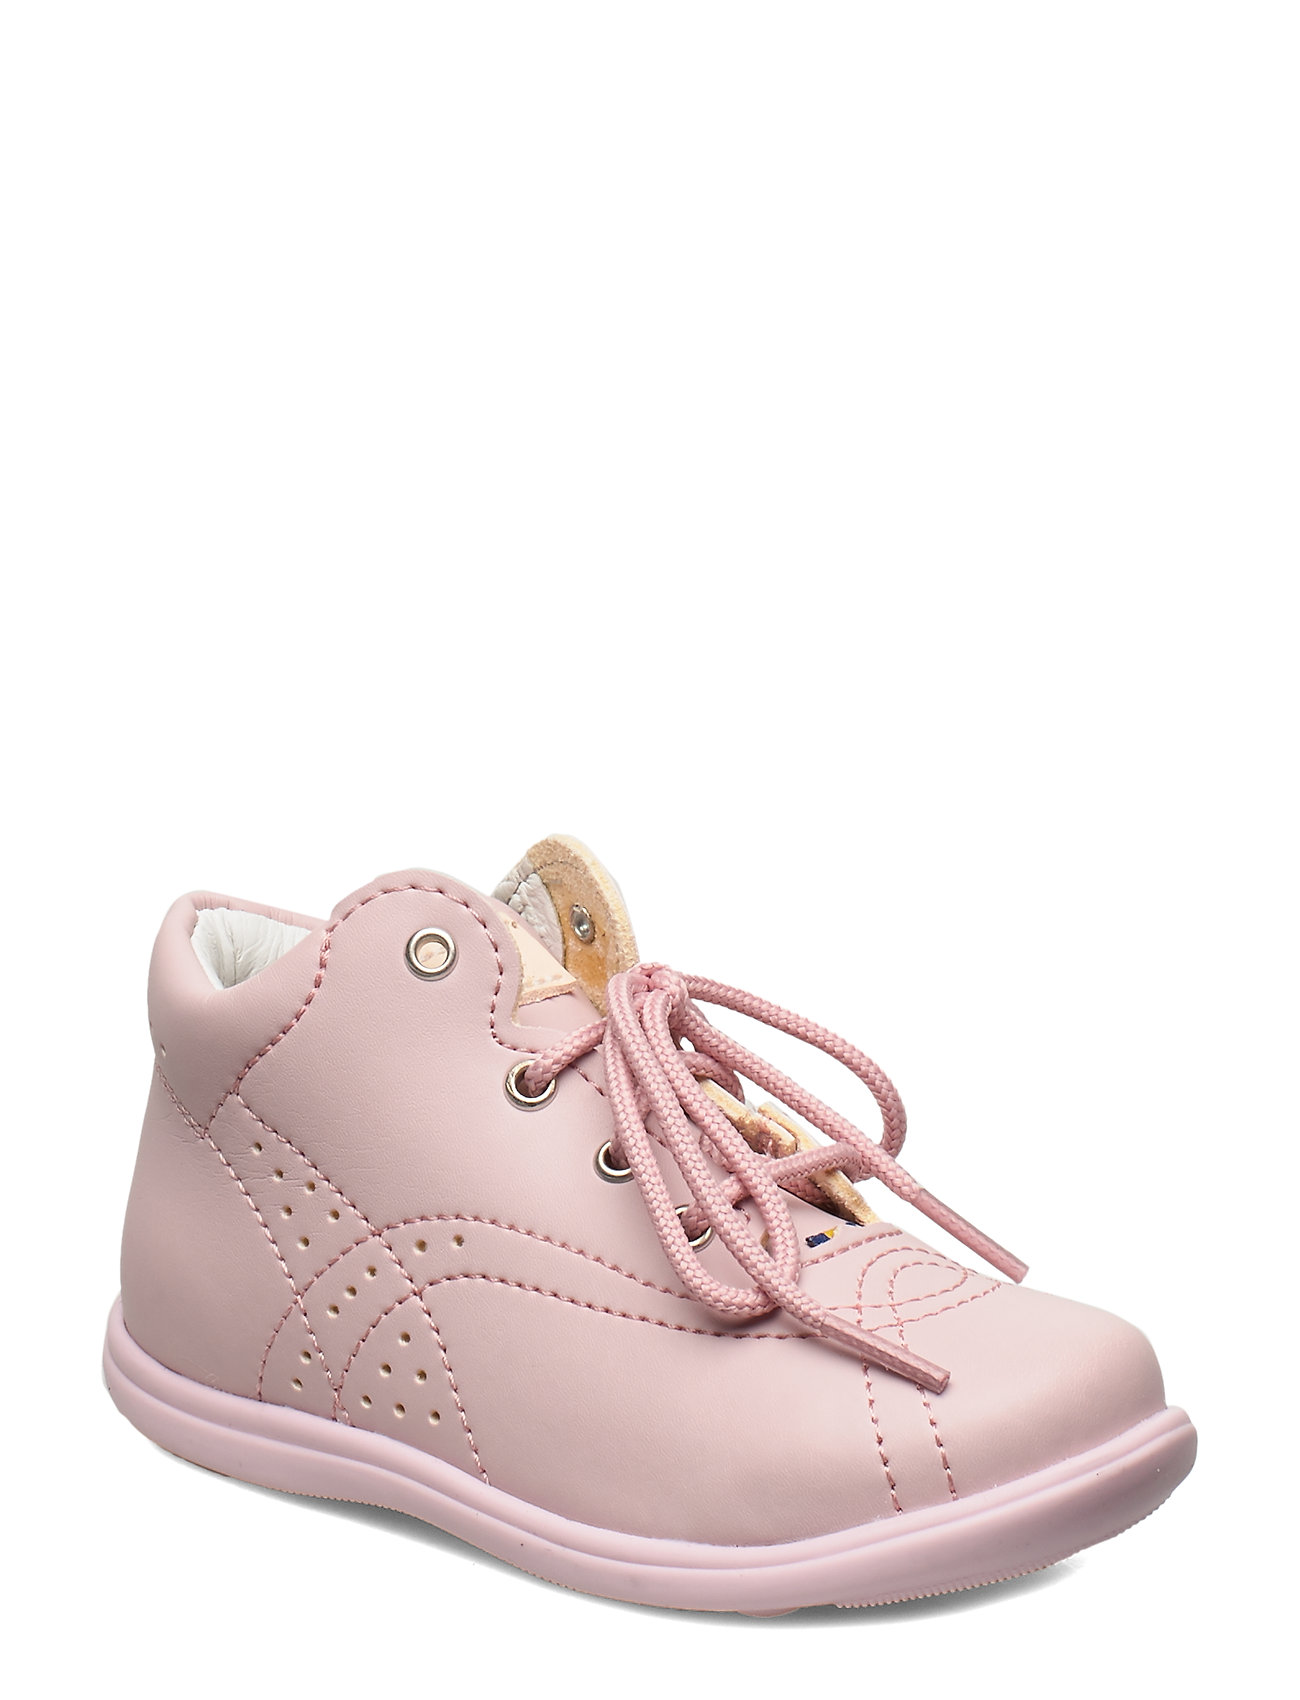 Edsbro Xc Shoes Pre Walkers 18-25 Vaaleanpunainen Kavat